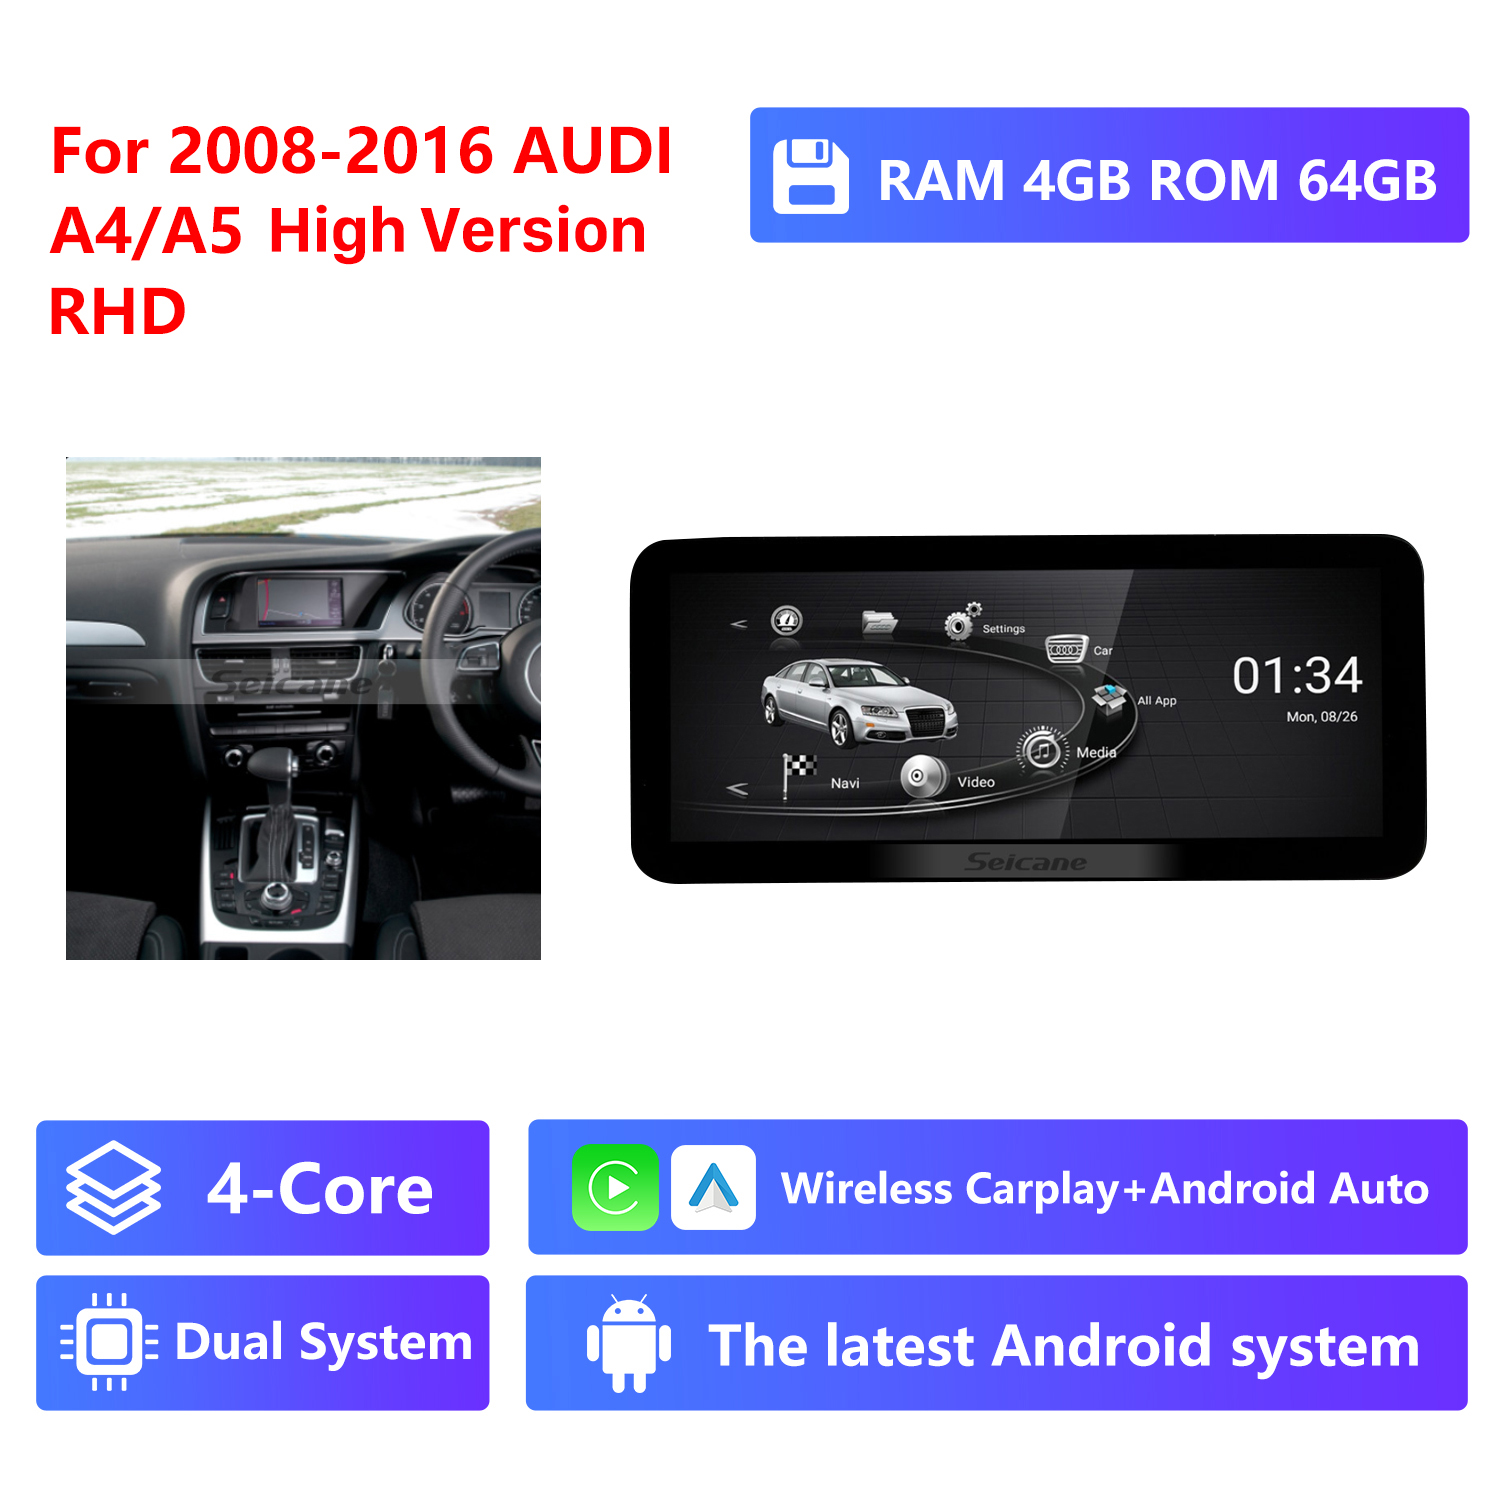 4-Core RAM 4G ROM 64G,2008-2016,High version,RHD